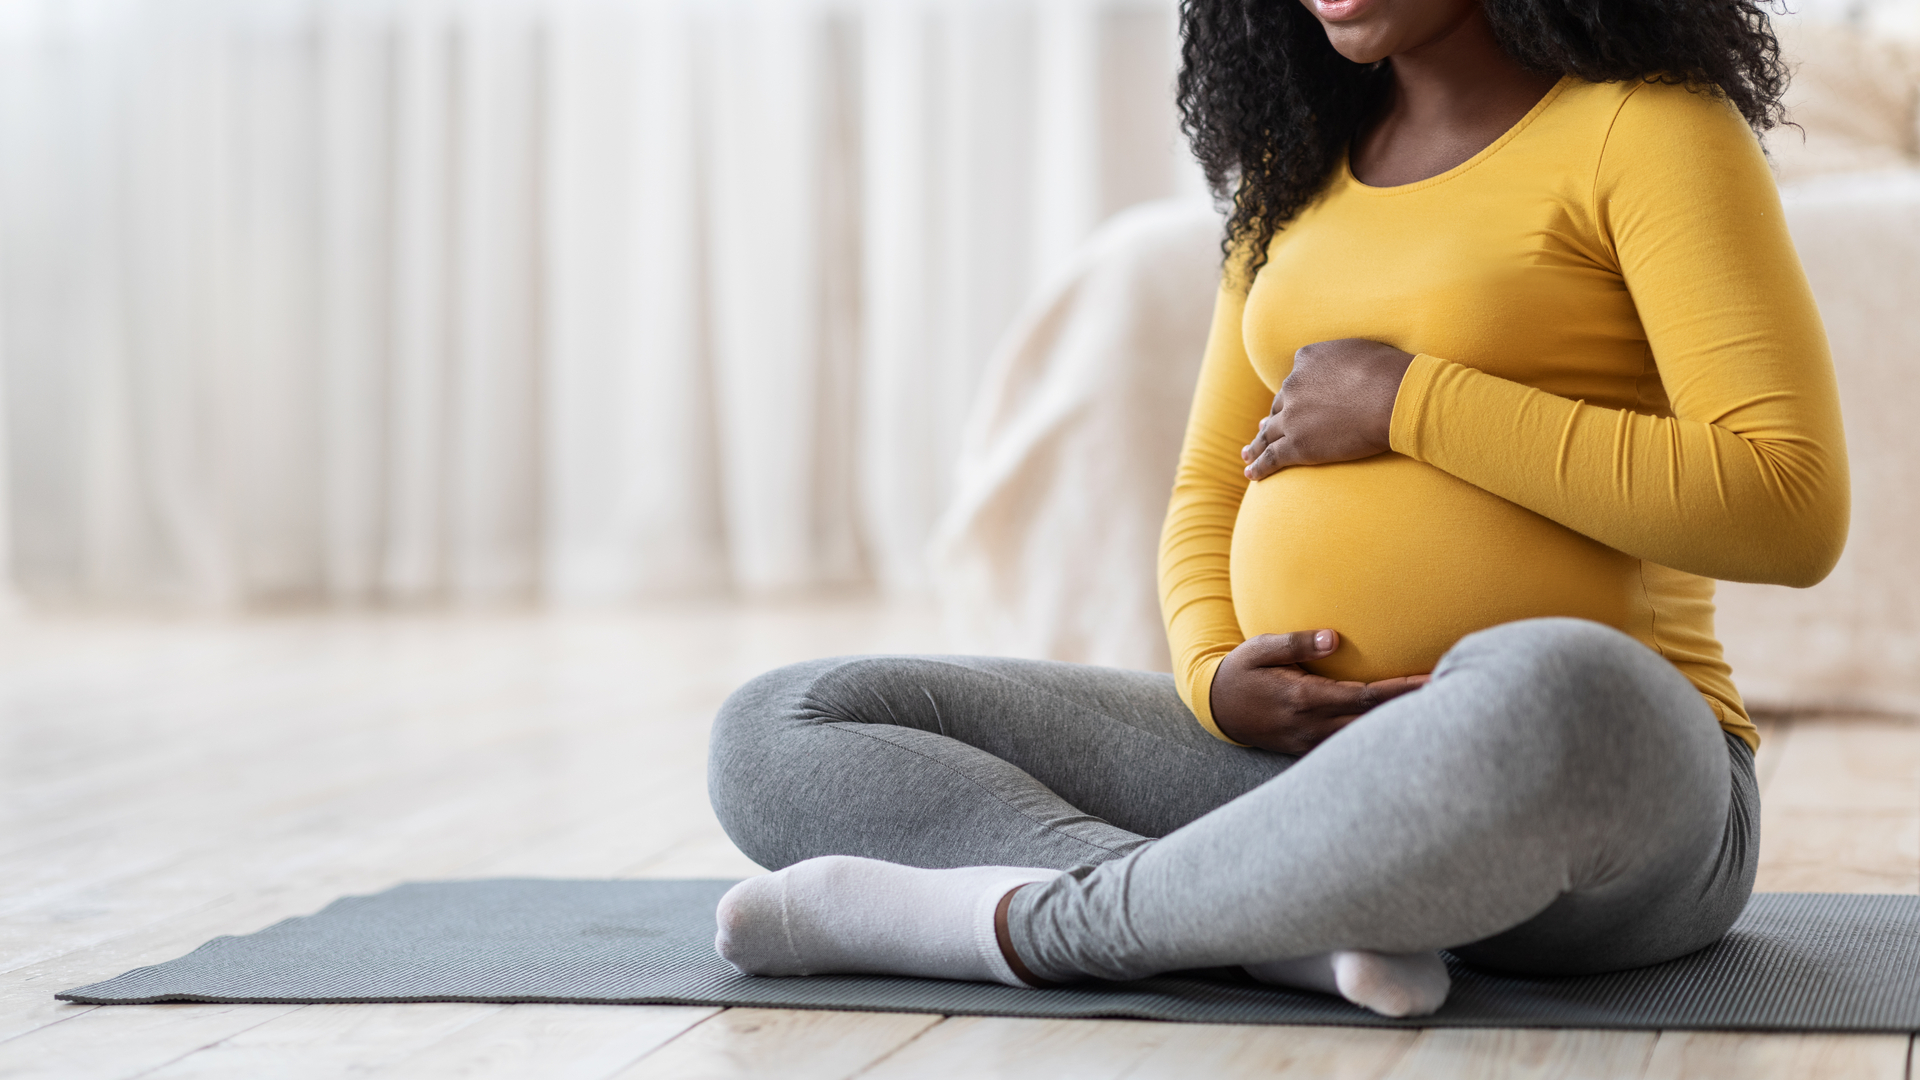 Pregnant woman sitting on floor